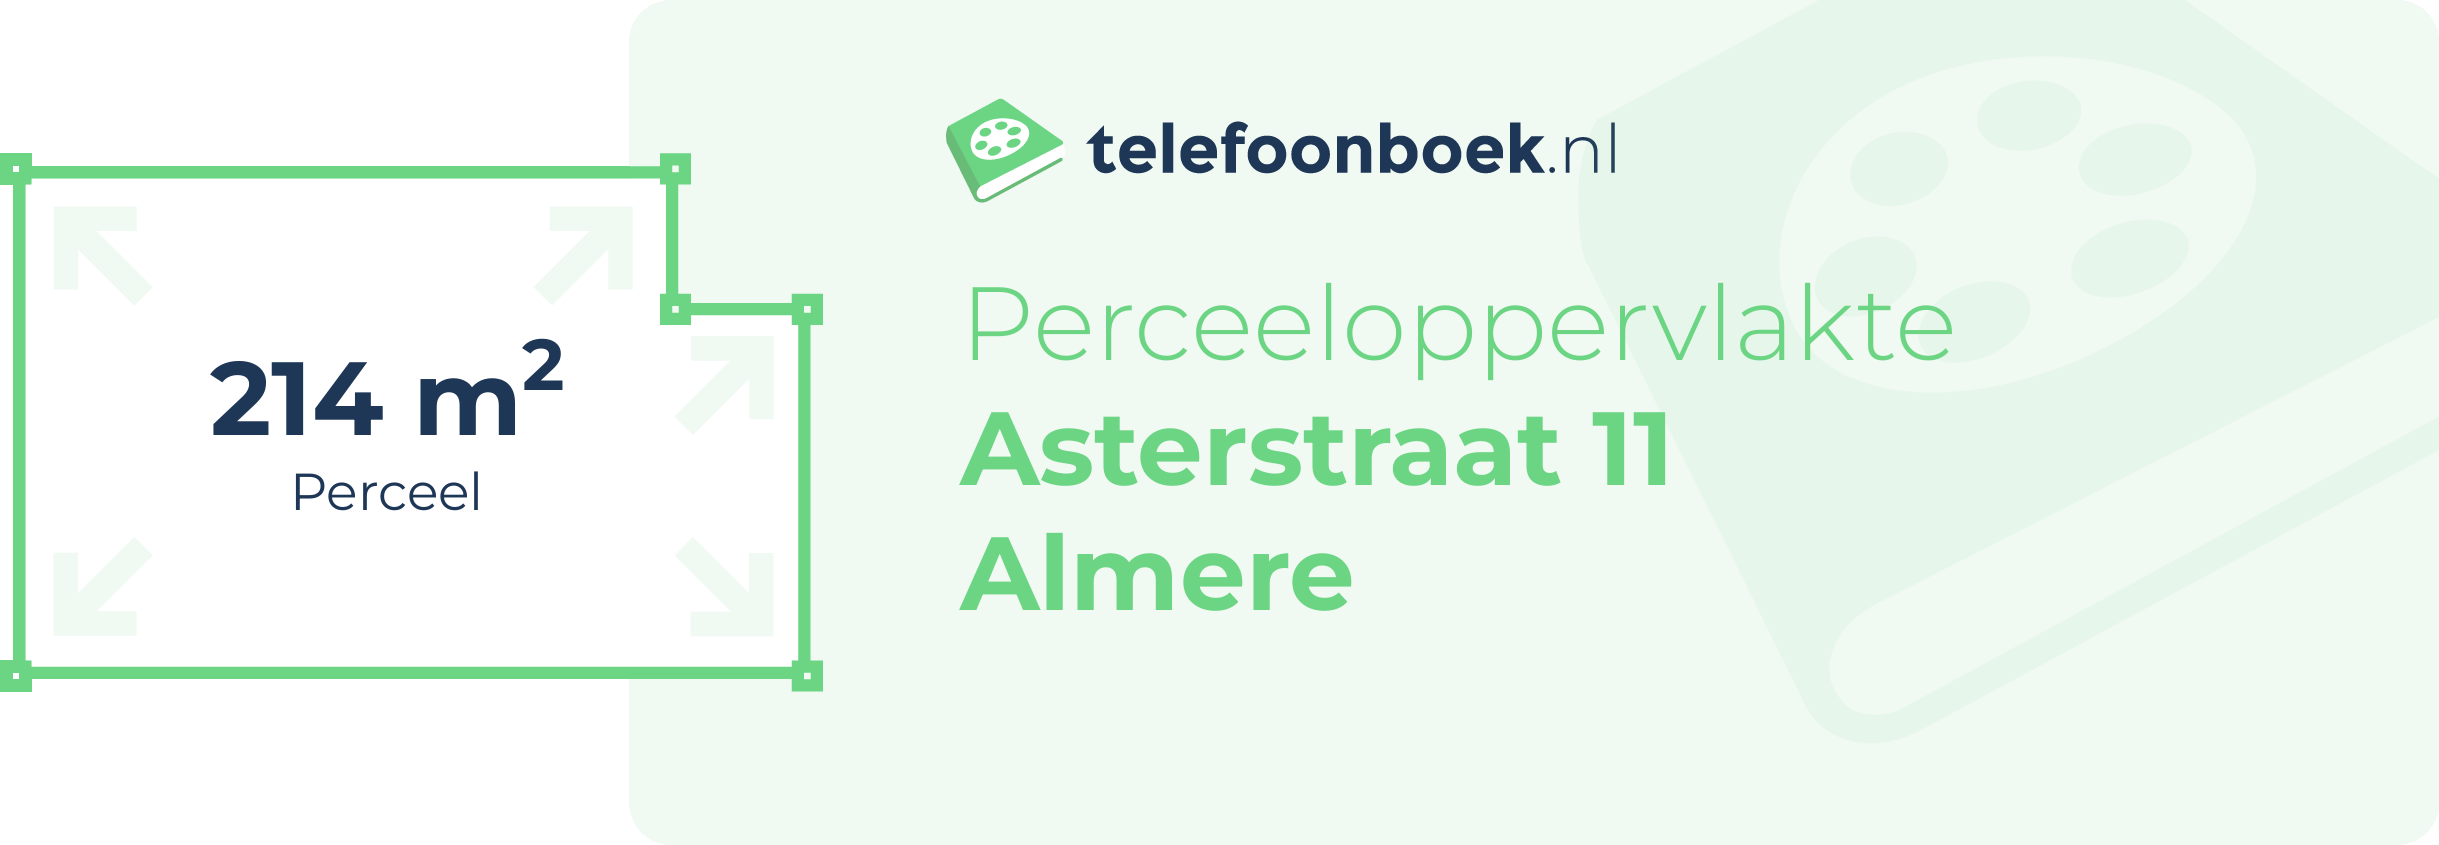 Perceeloppervlakte Asterstraat 11 Almere